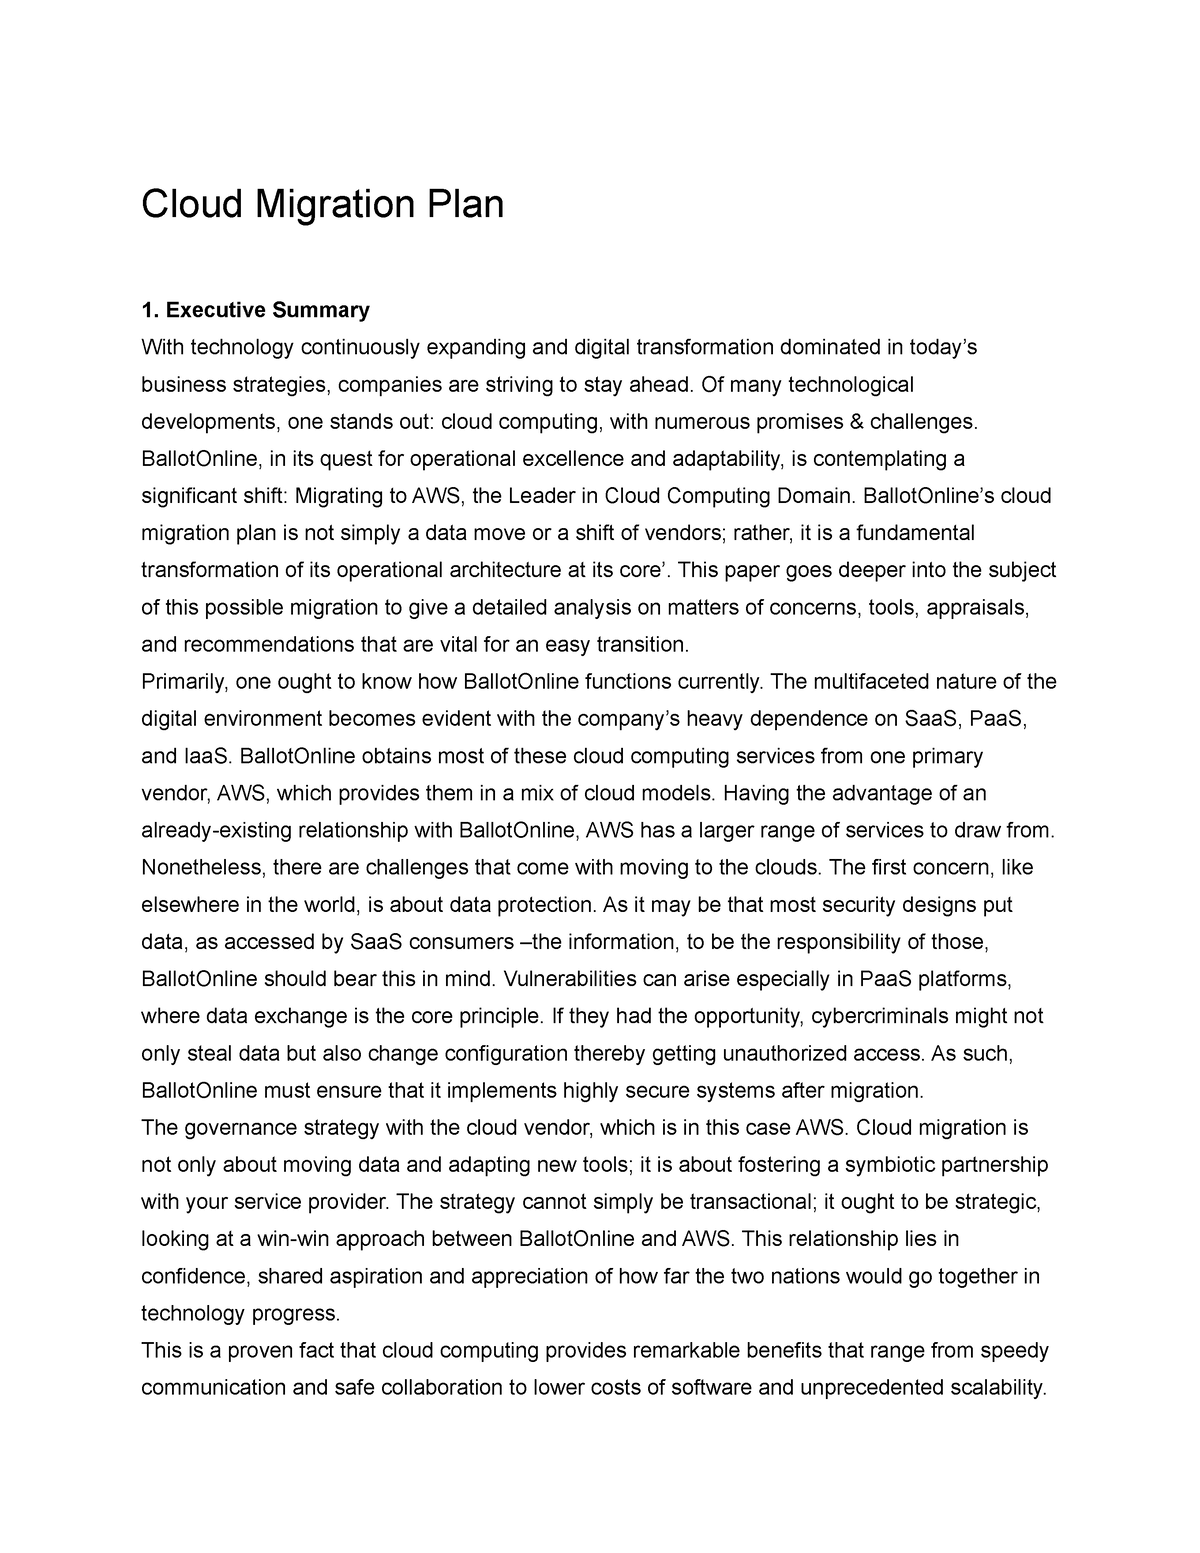 Cloud Migration Plan Template Cloud Migration Plan Executive Summary